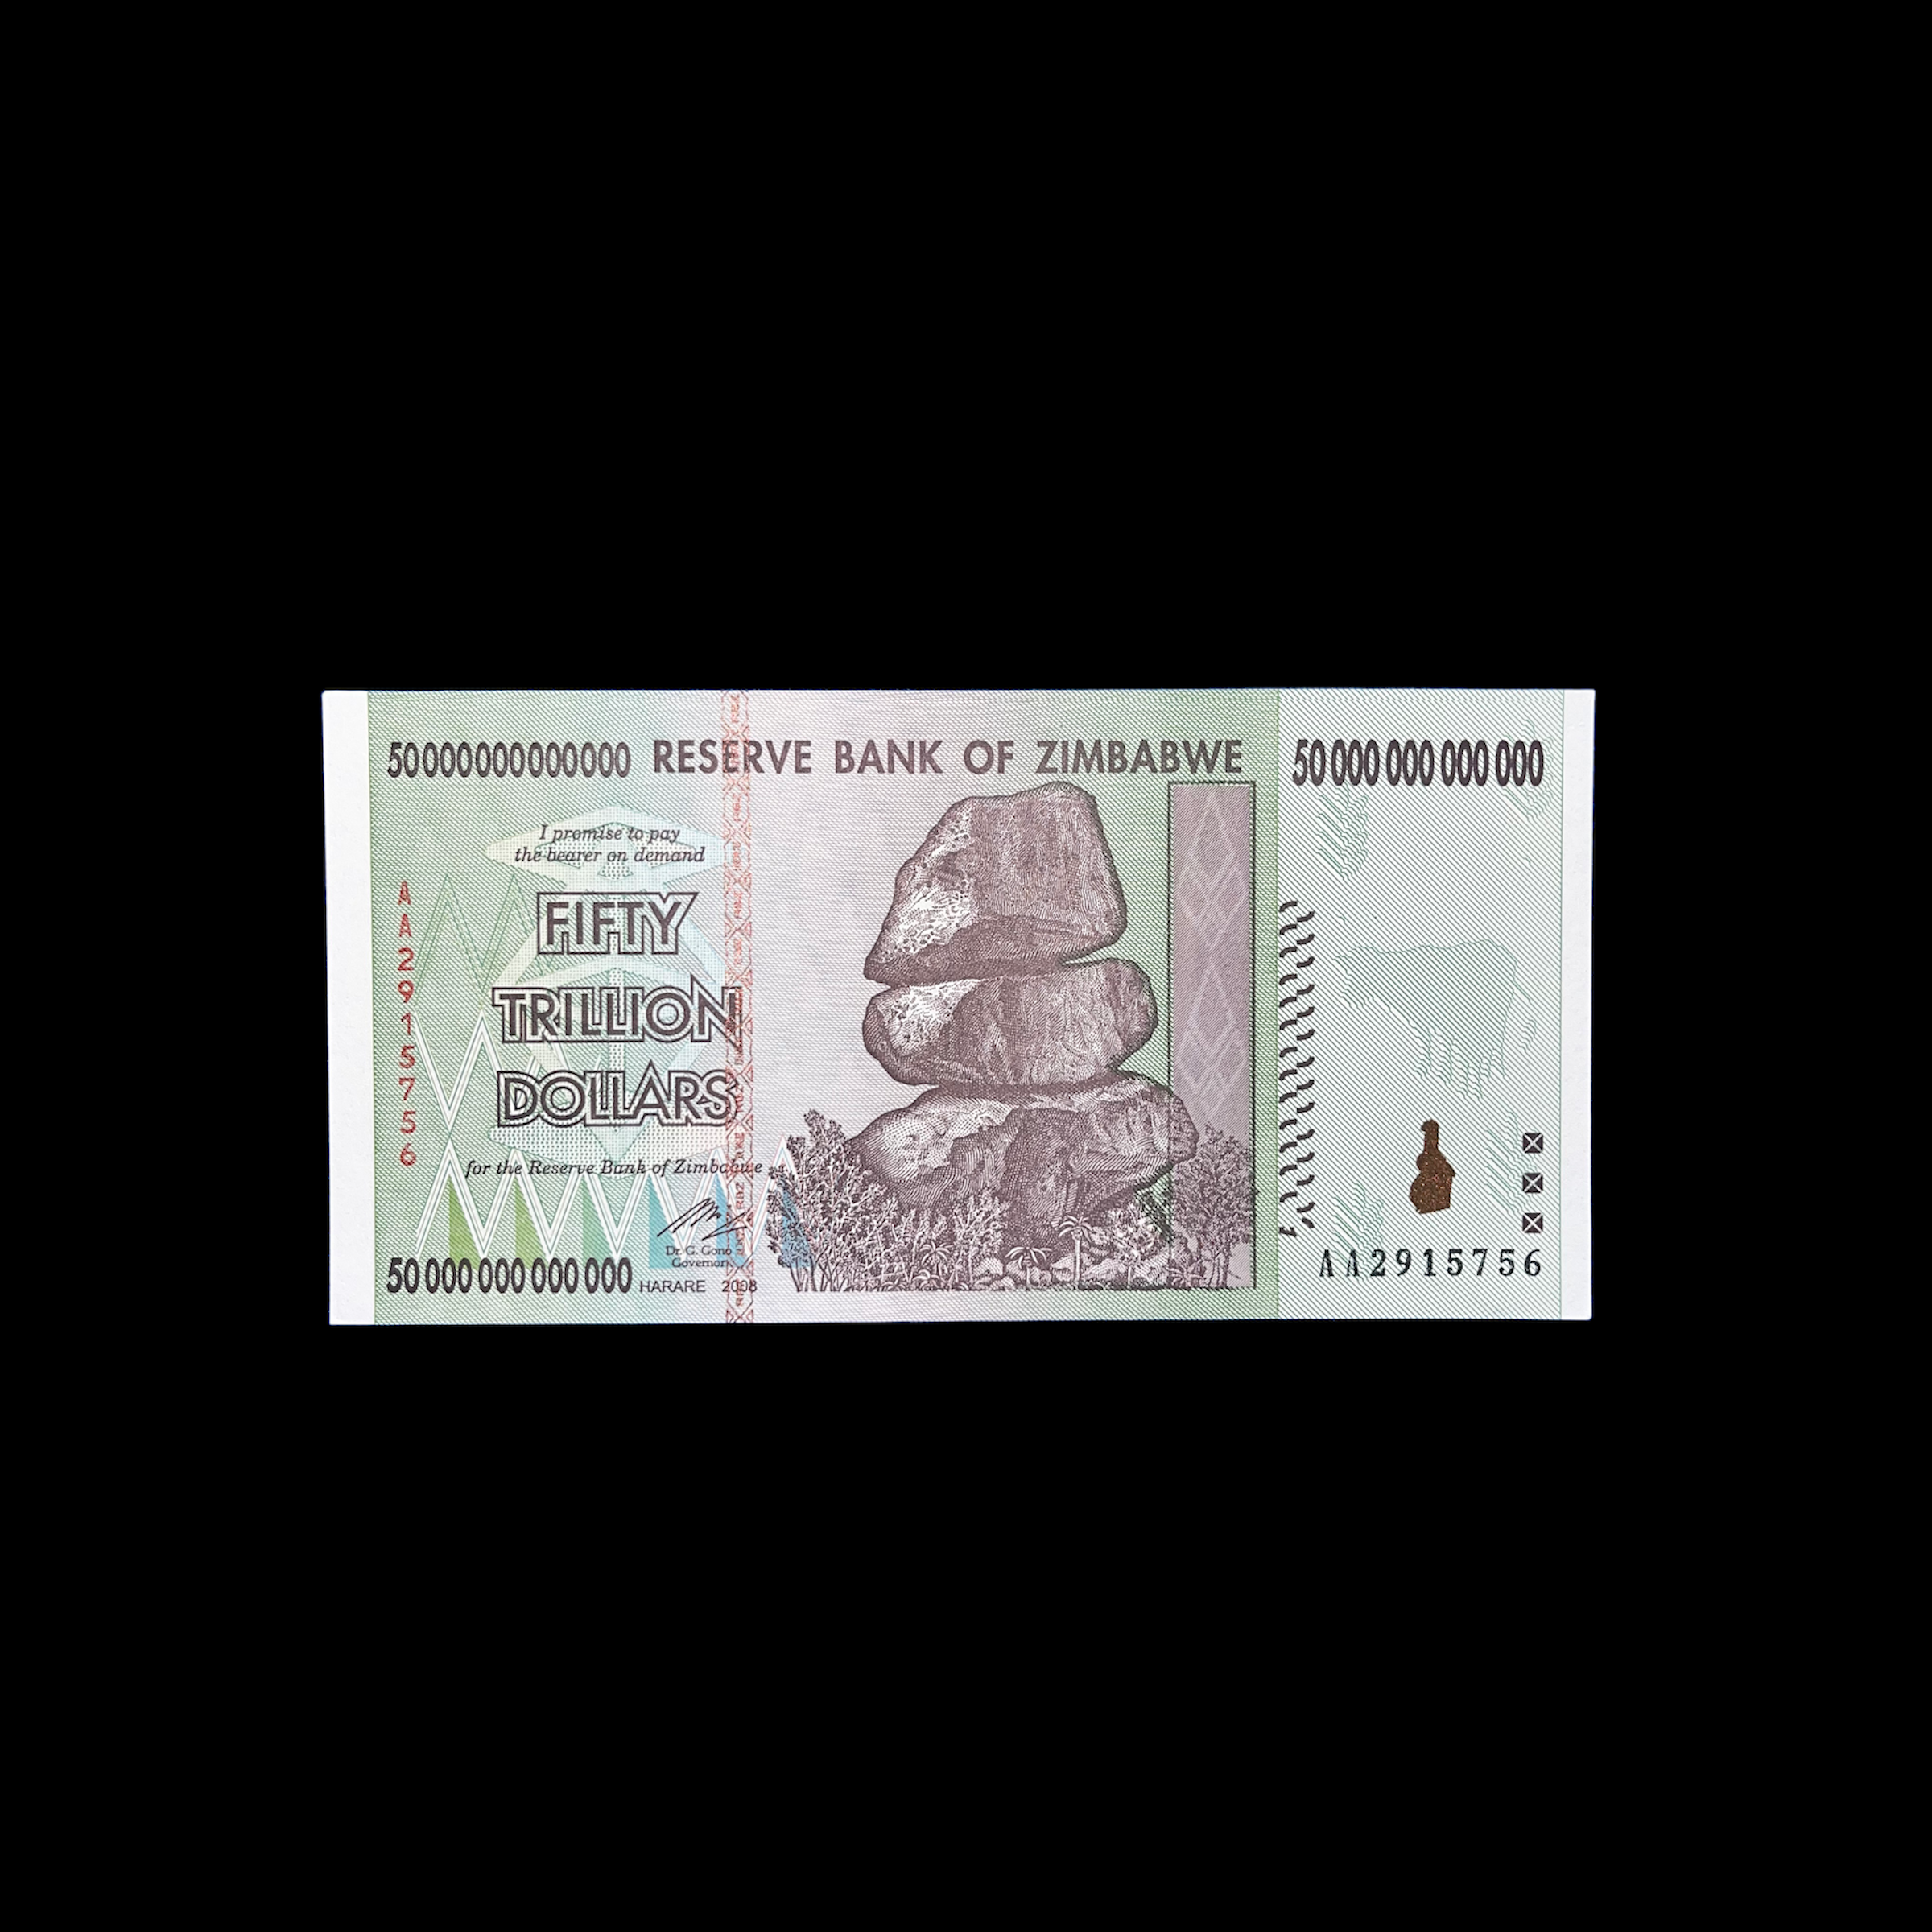 Zimbabwe-50 billones de dólares